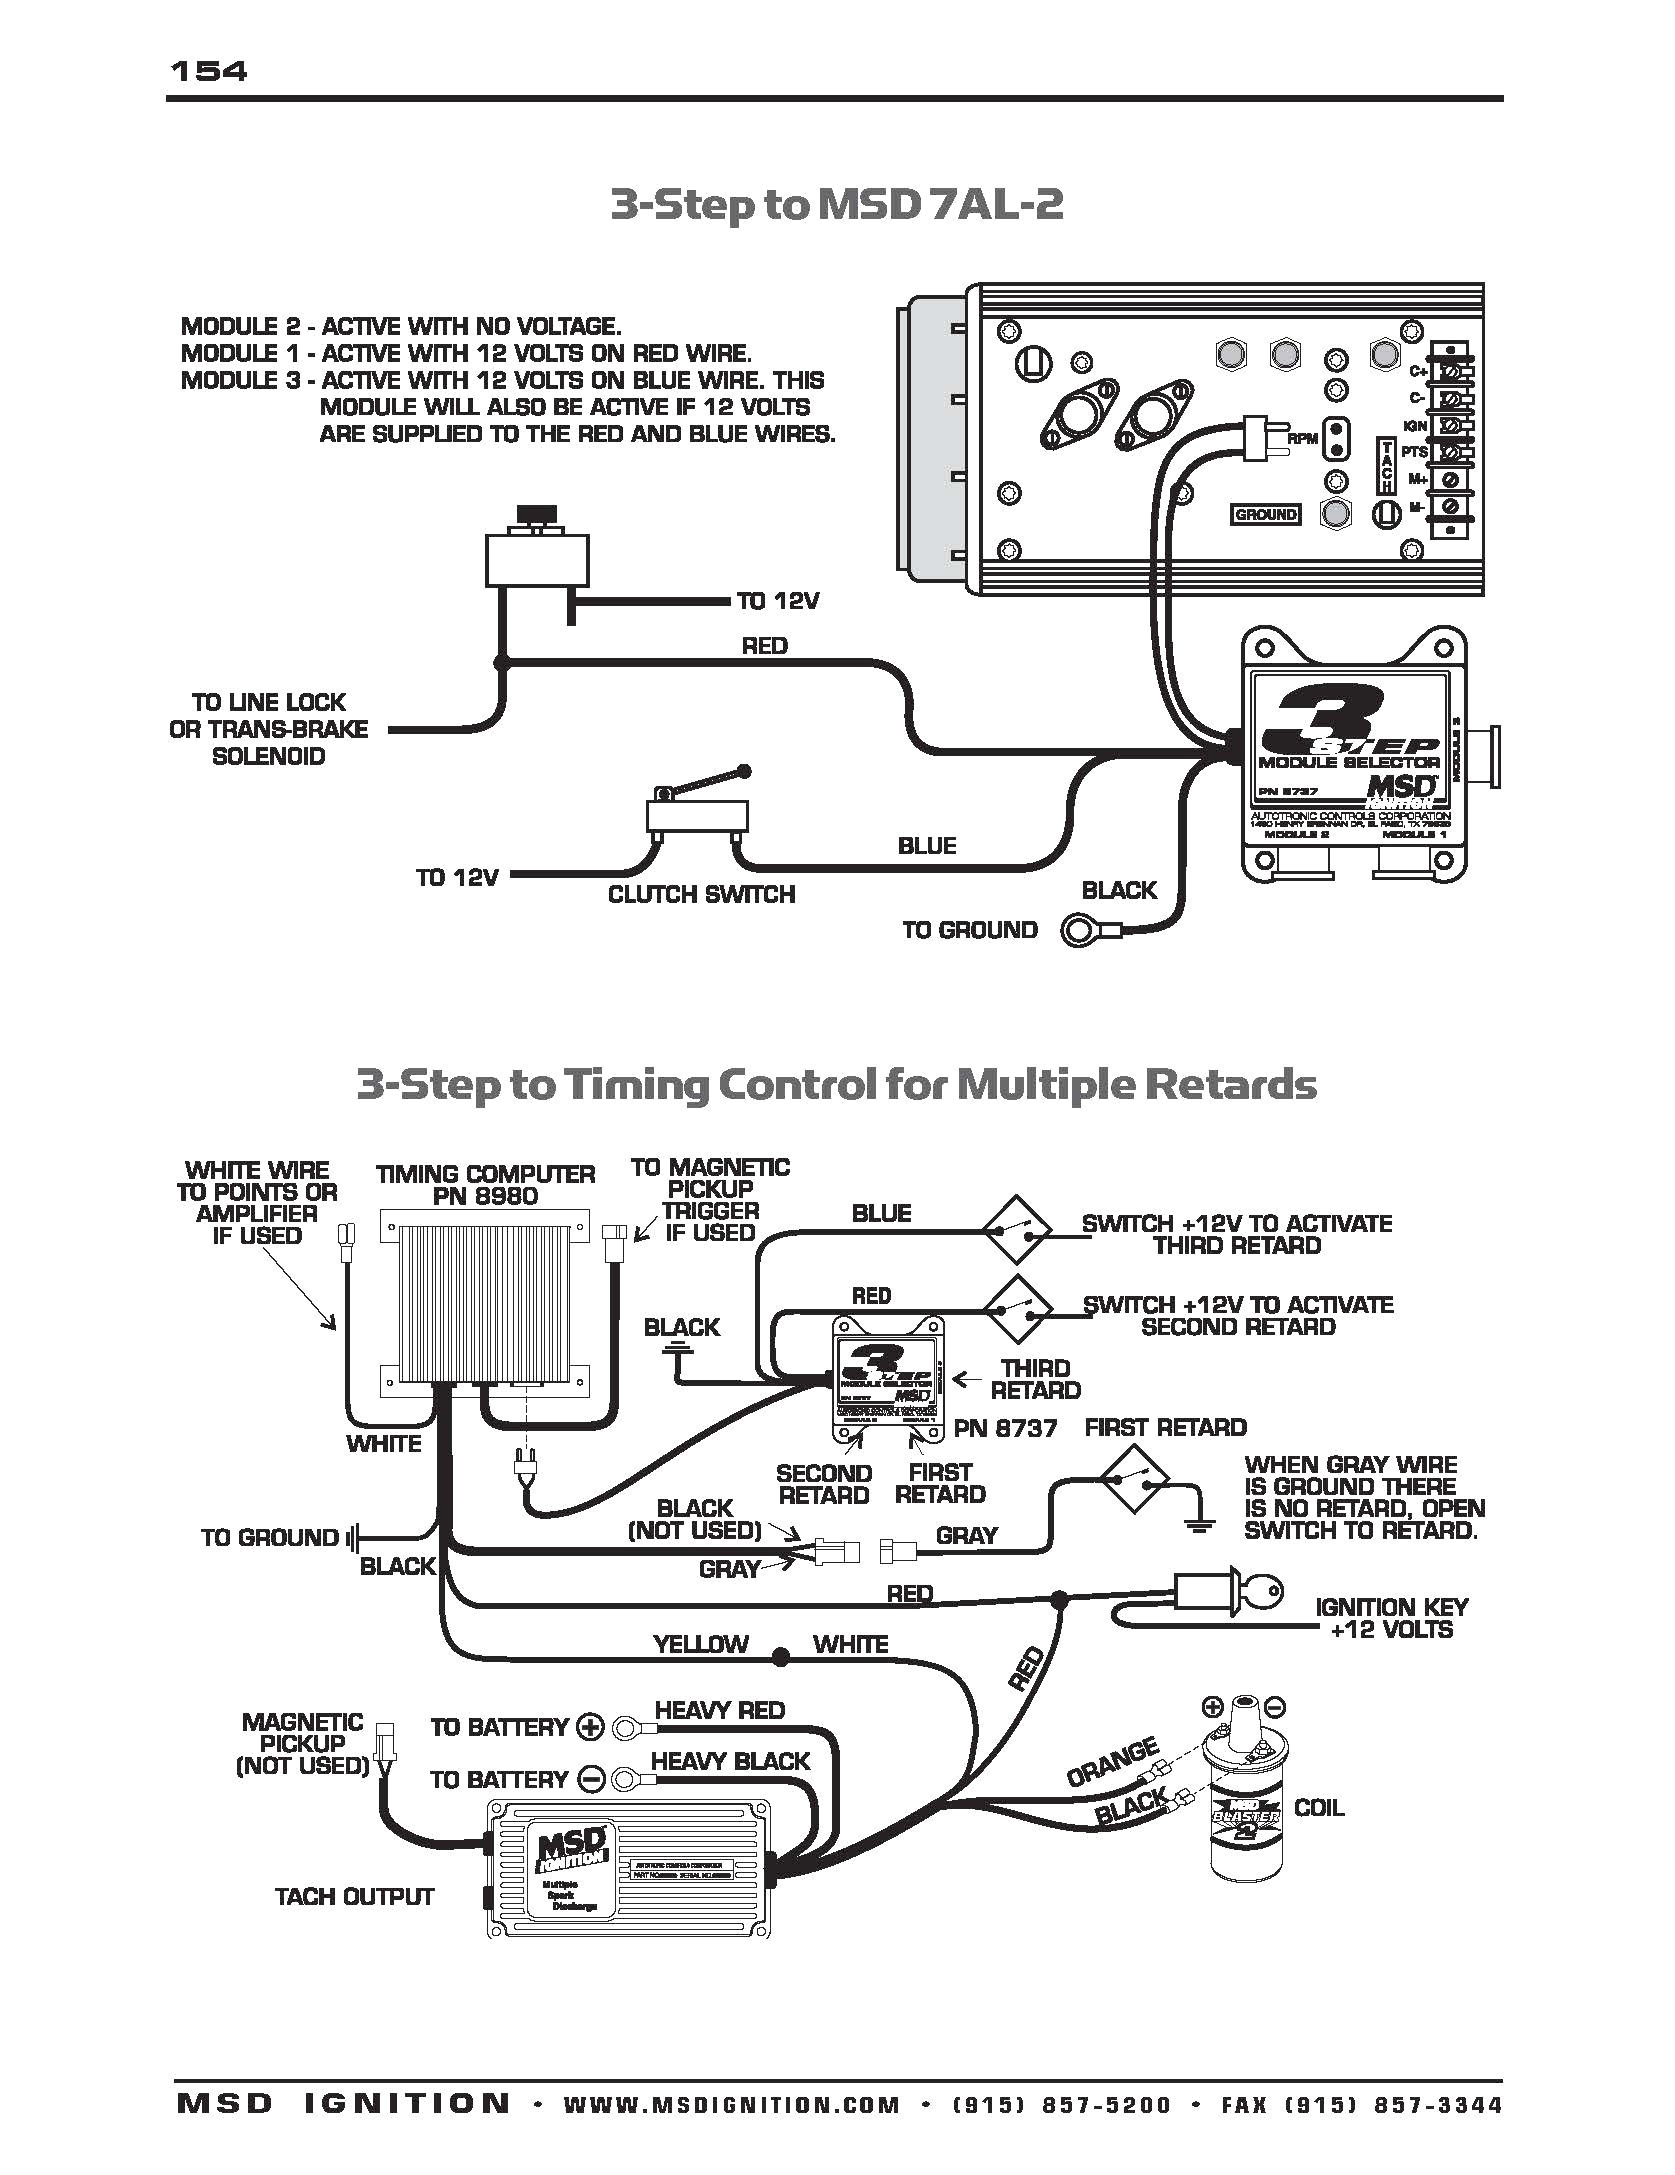 msd 3 step wiring diagram best of wiring diagram msd ignition 6ad jpg